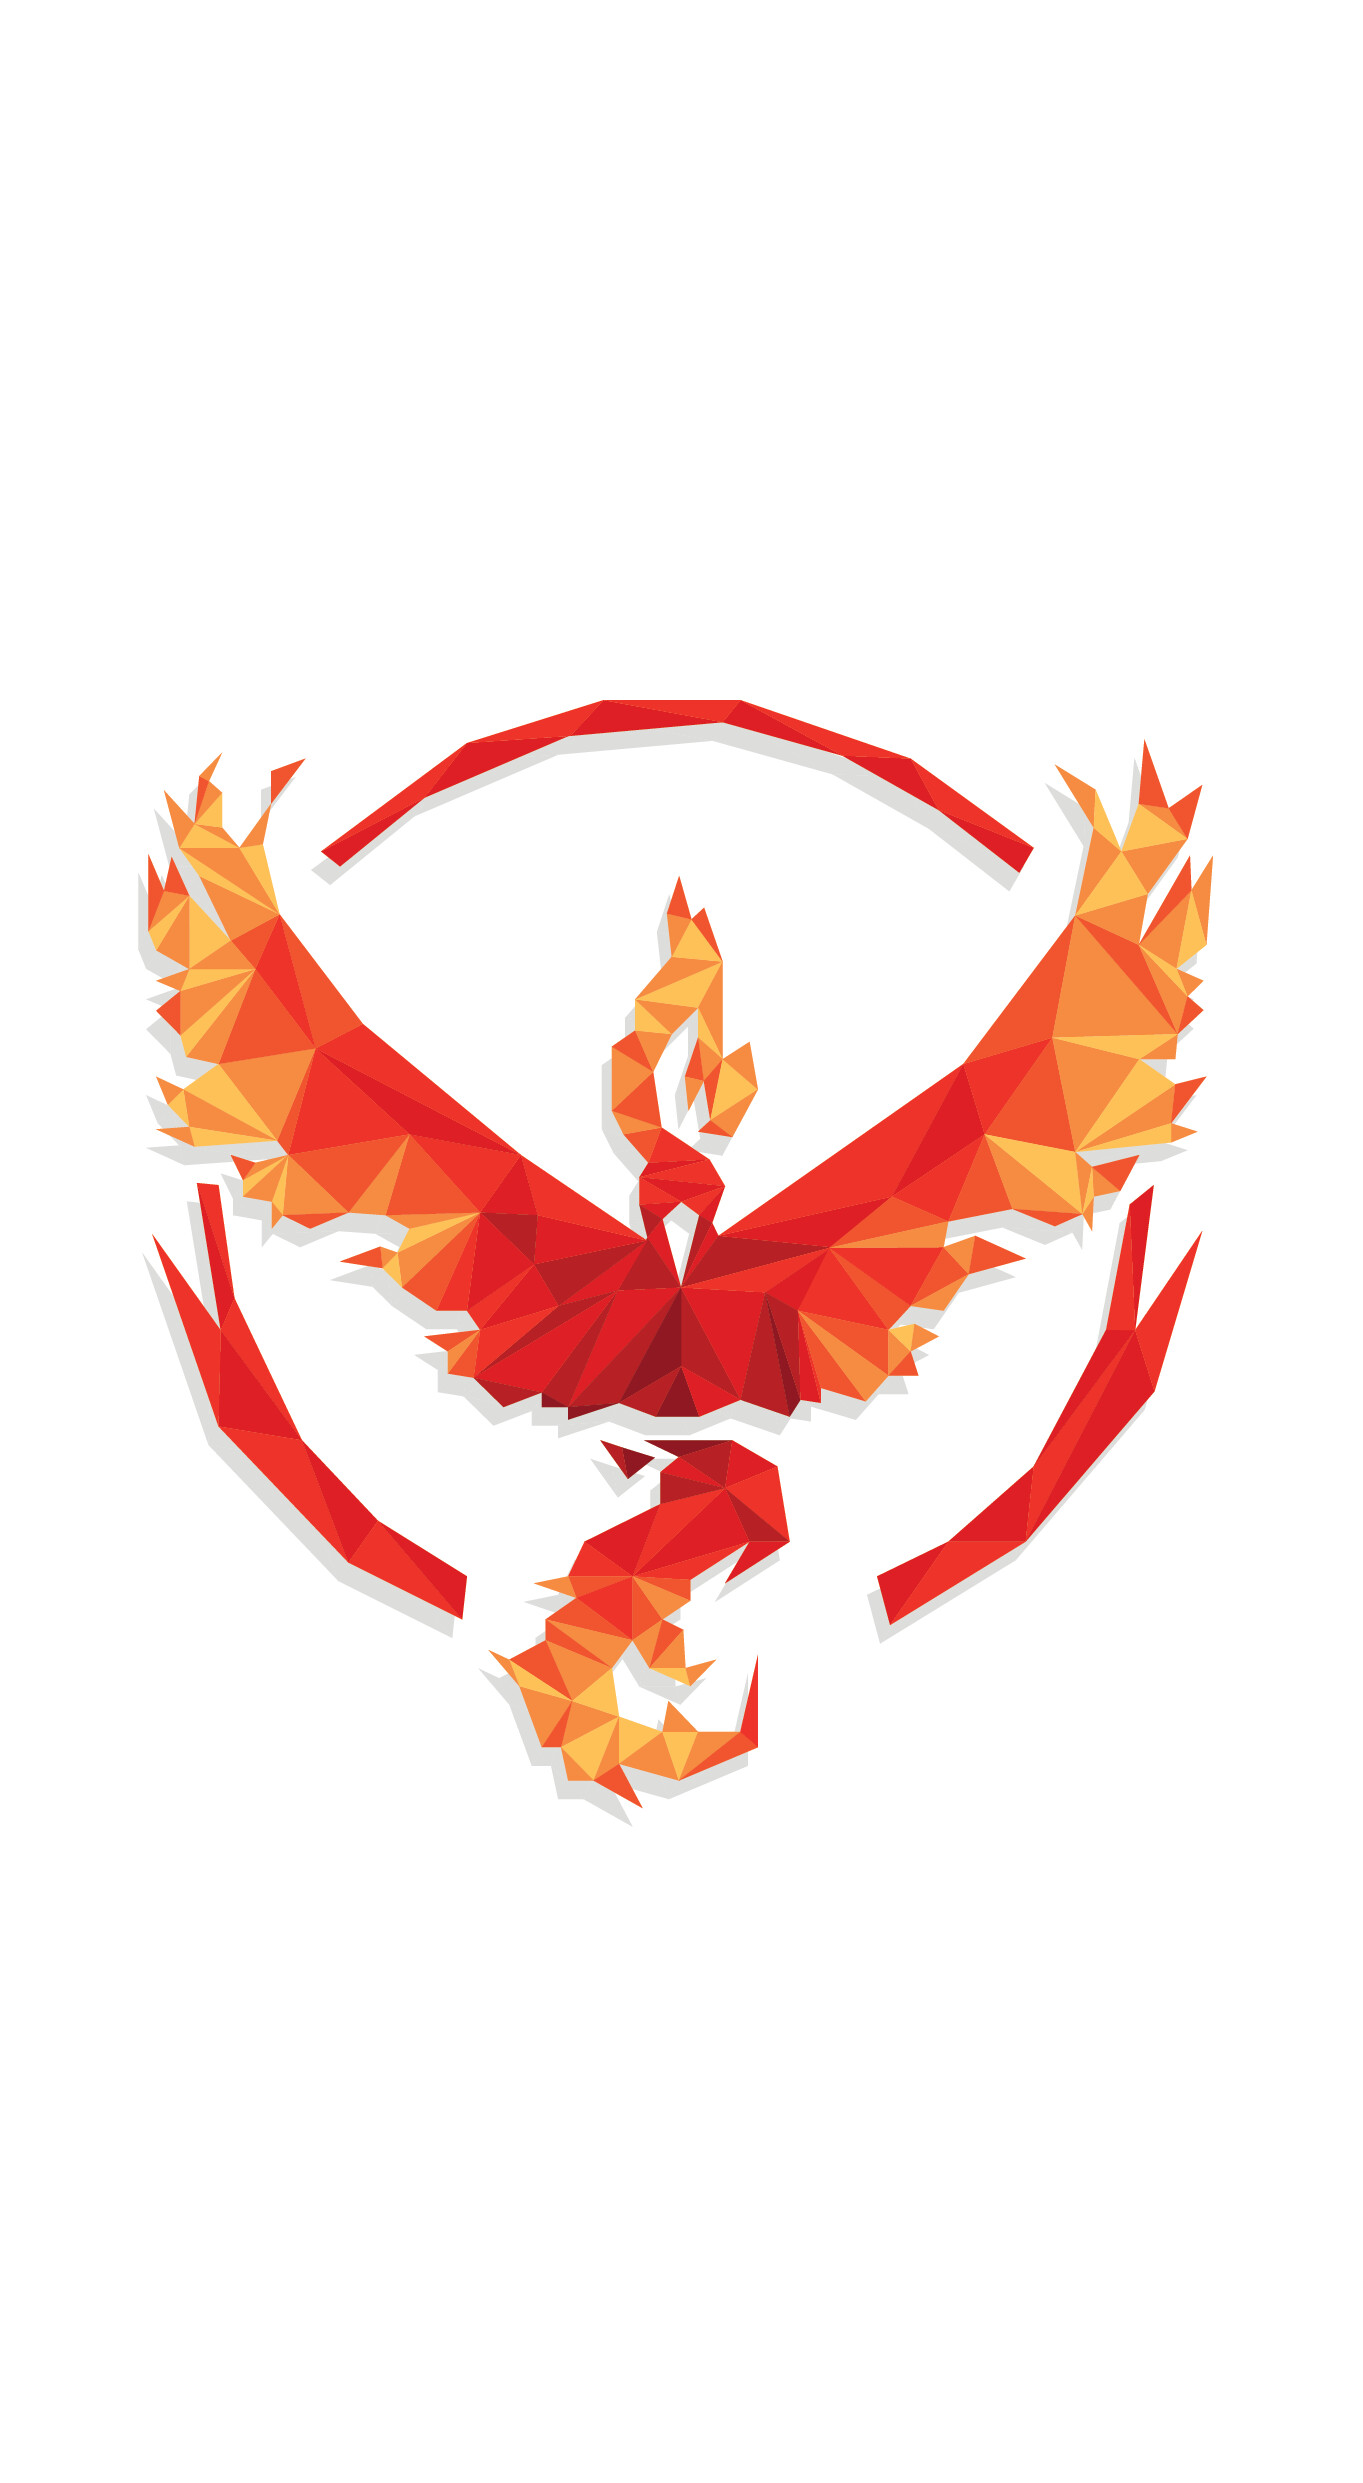 Geometric Animal: Pokemon phoenix tattoo, Art movement that utilized regular shapes. 1370x2490 HD Wallpaper.